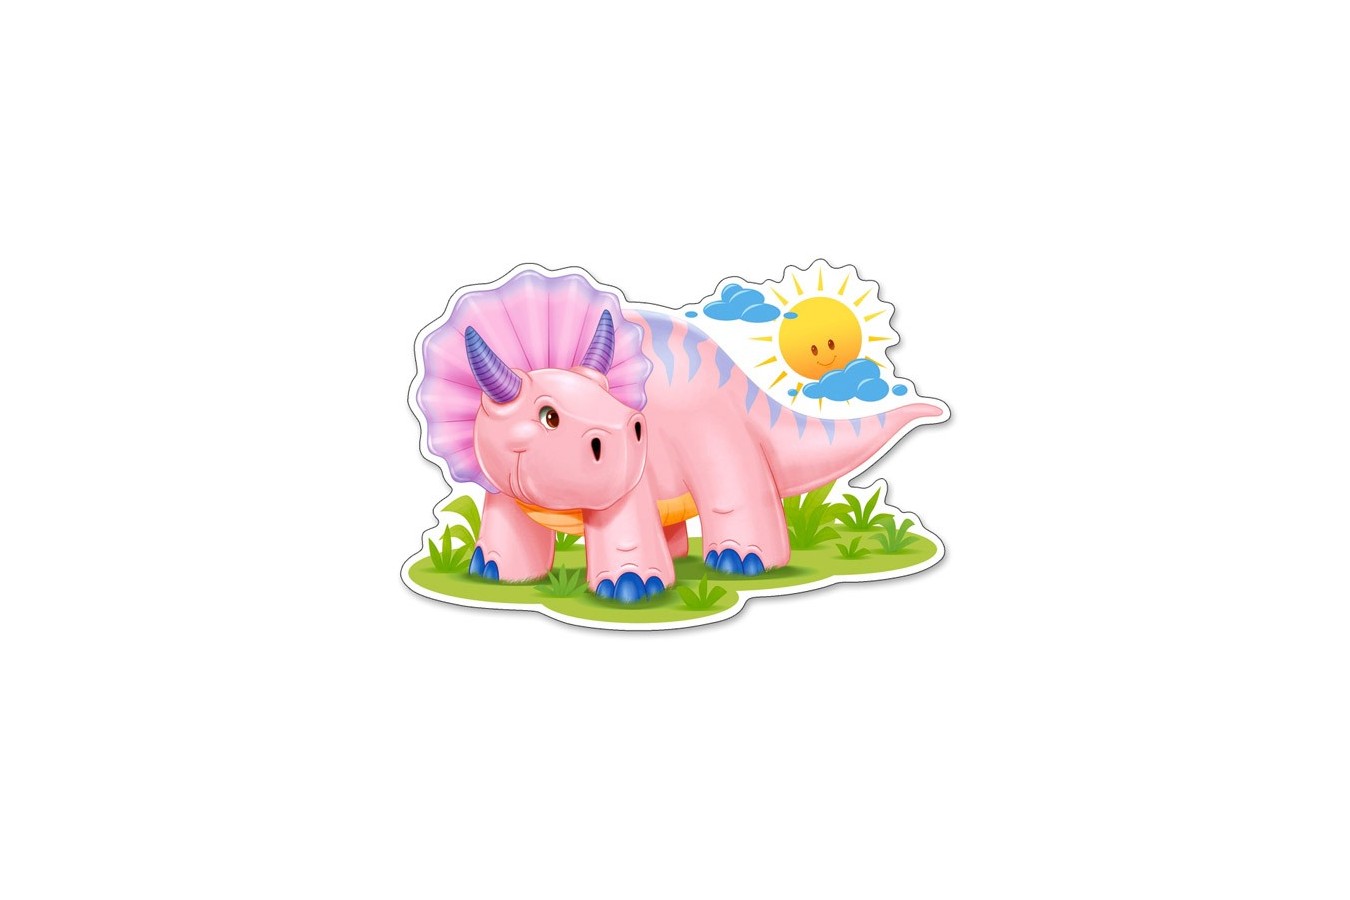 Puzzle contur Castorland - Pink Baby Triceratop, 12 piese XXL (120048)